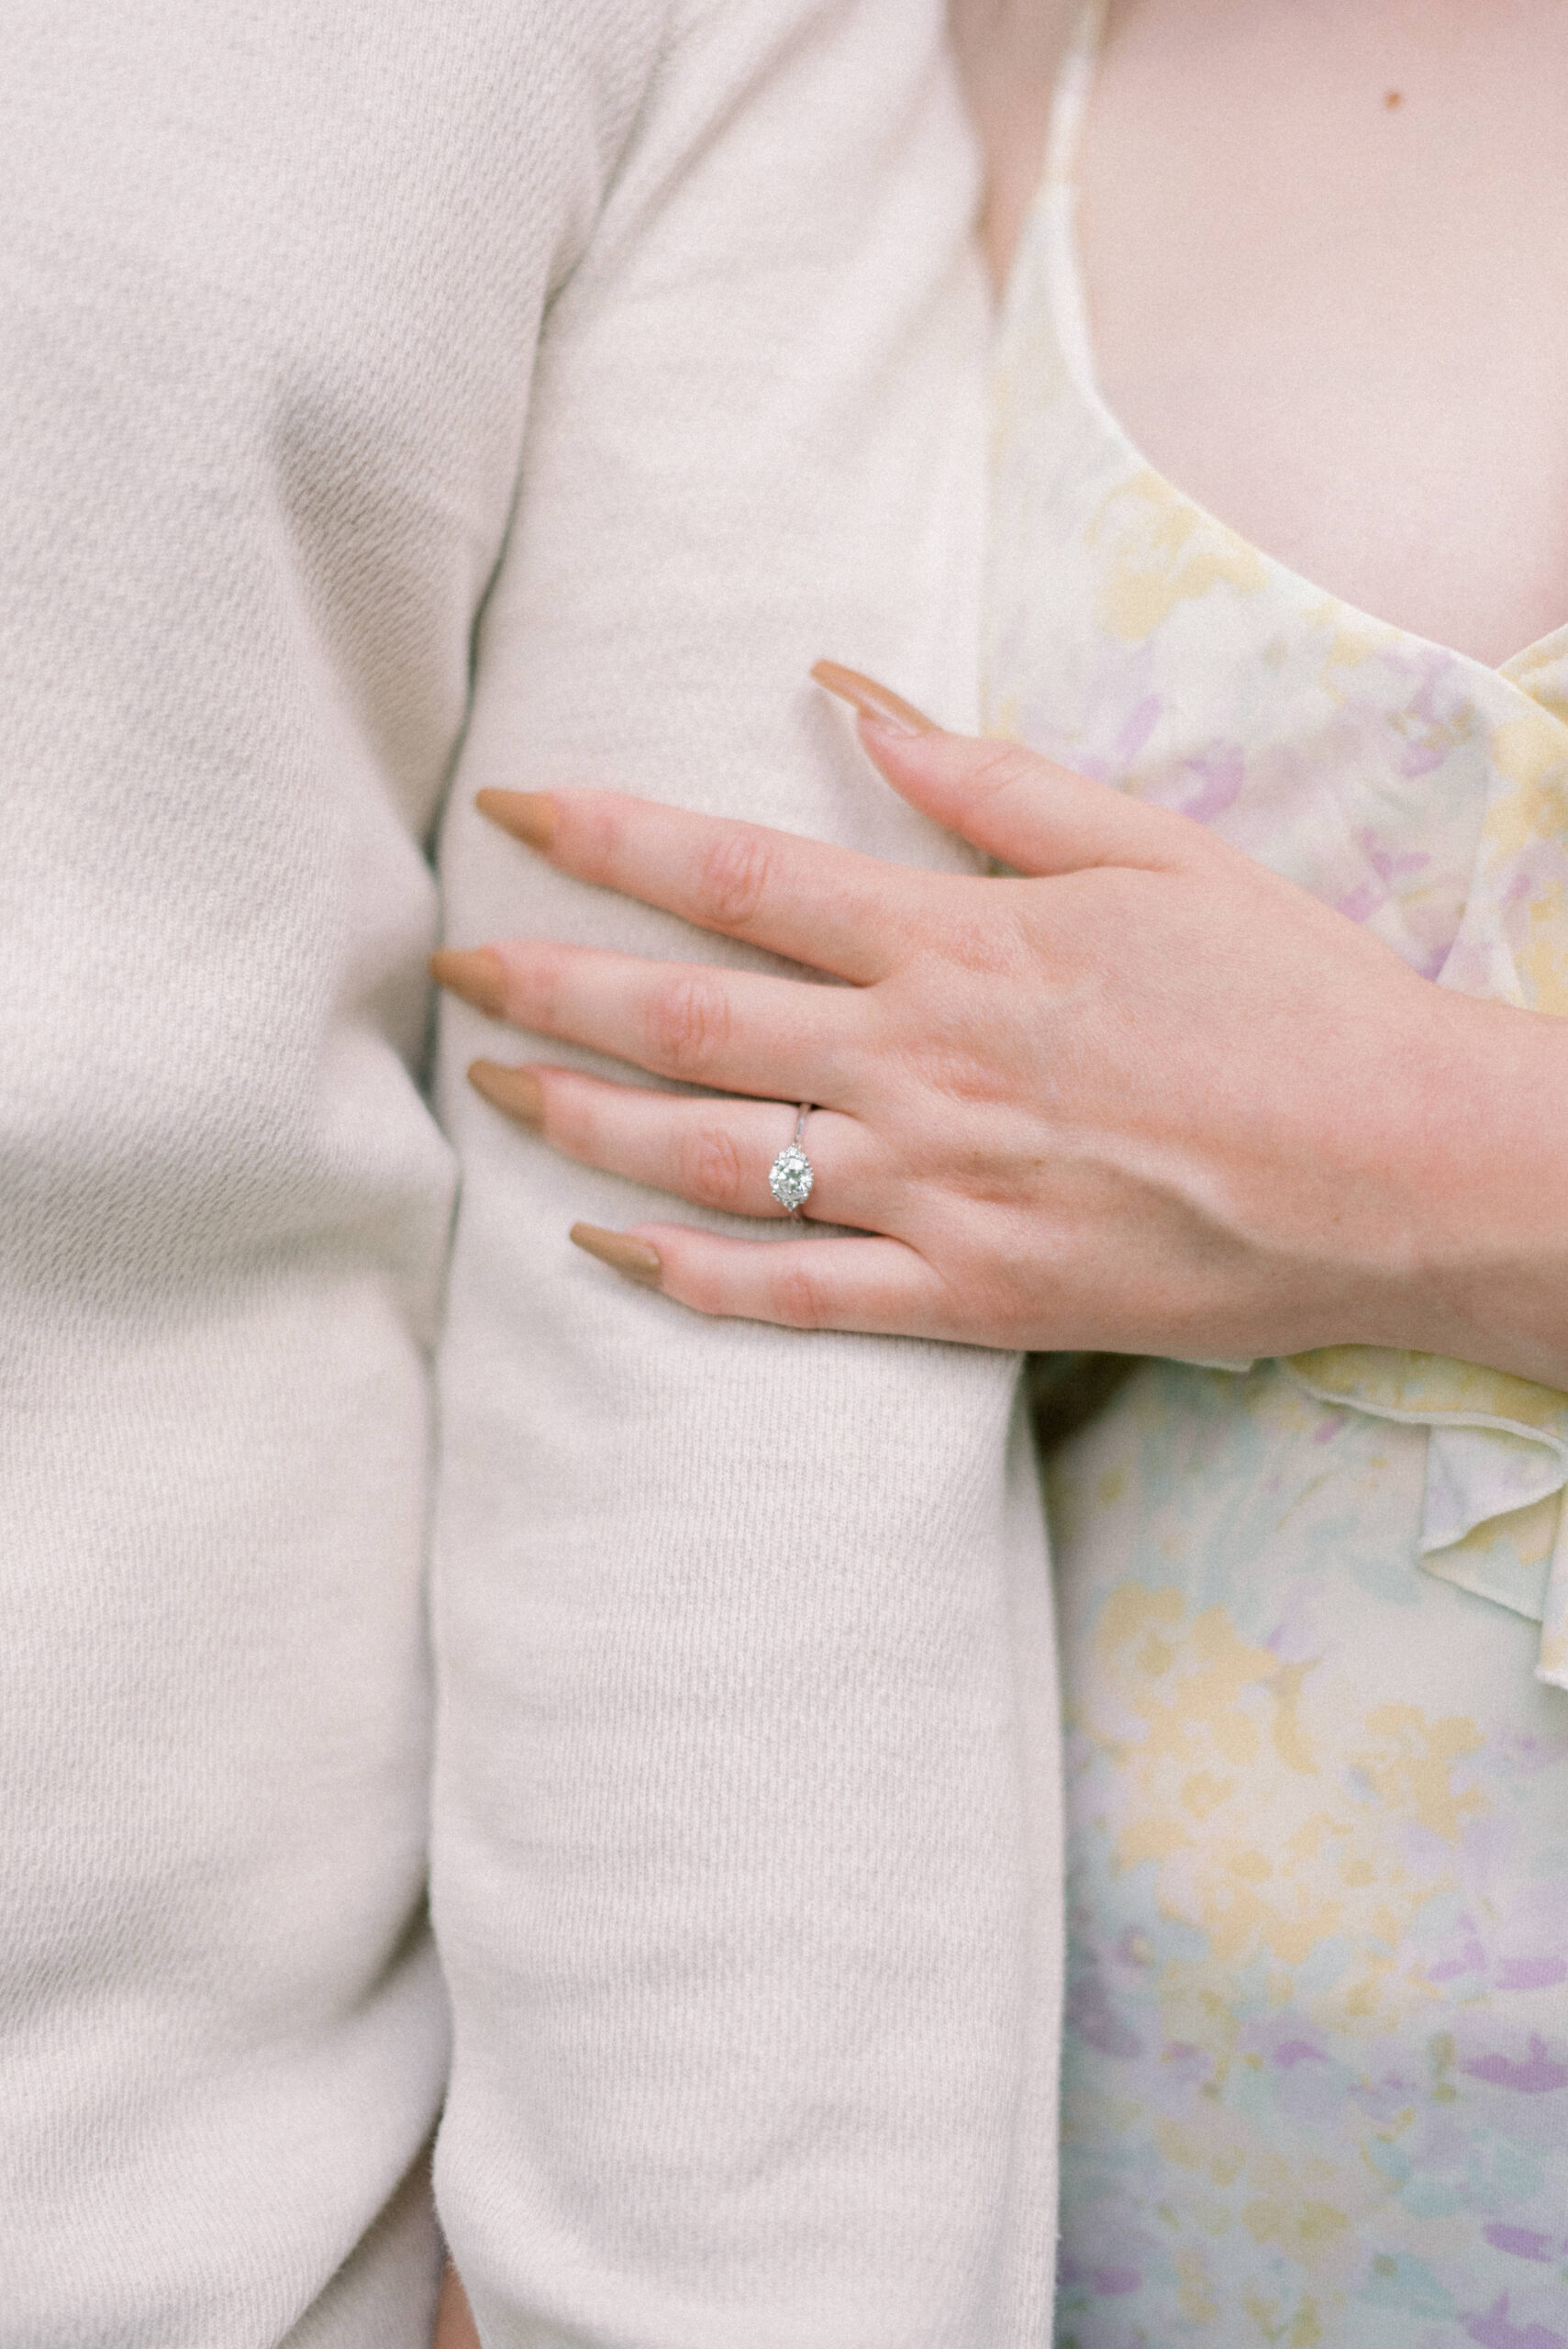 Maryland wedding photographer captures close up of engagement ring